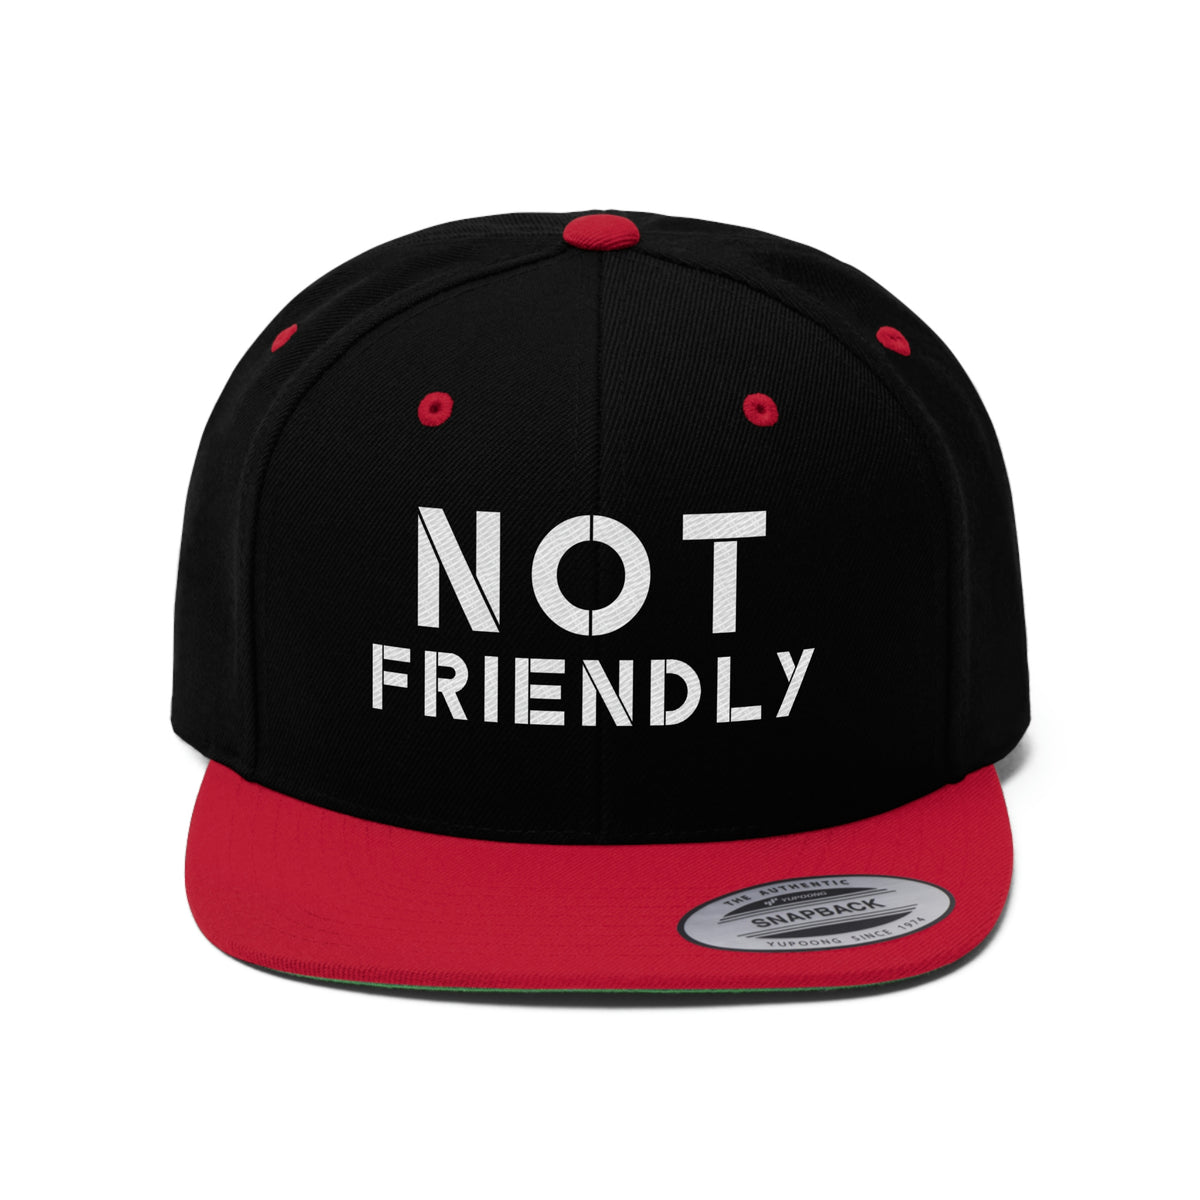 The Not Friendly Flat Bill Hat - unisex